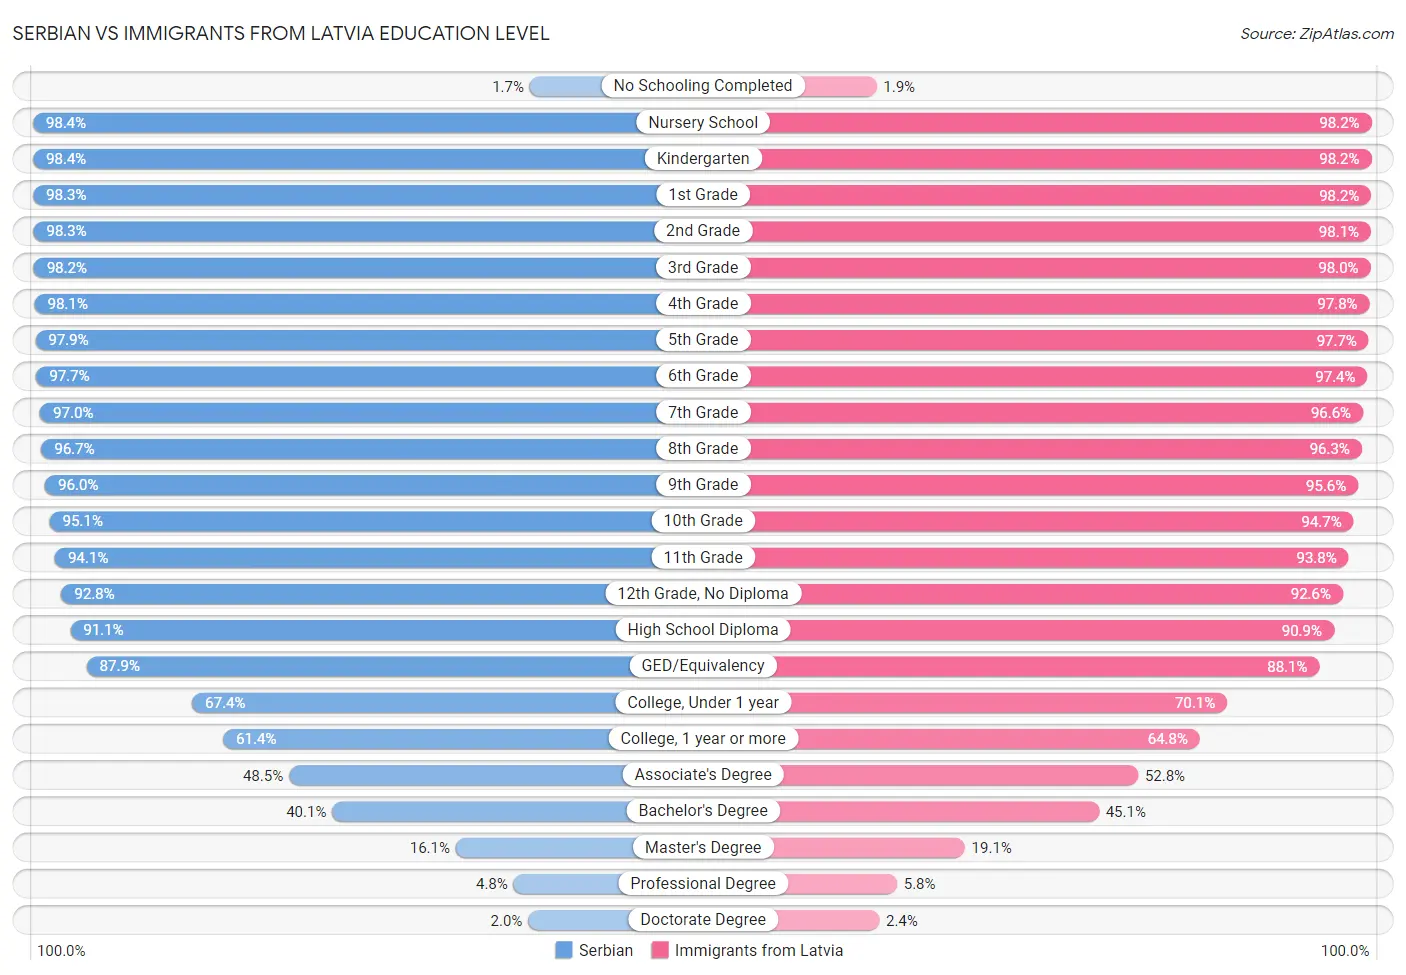 Serbian vs Immigrants from Latvia Education Level